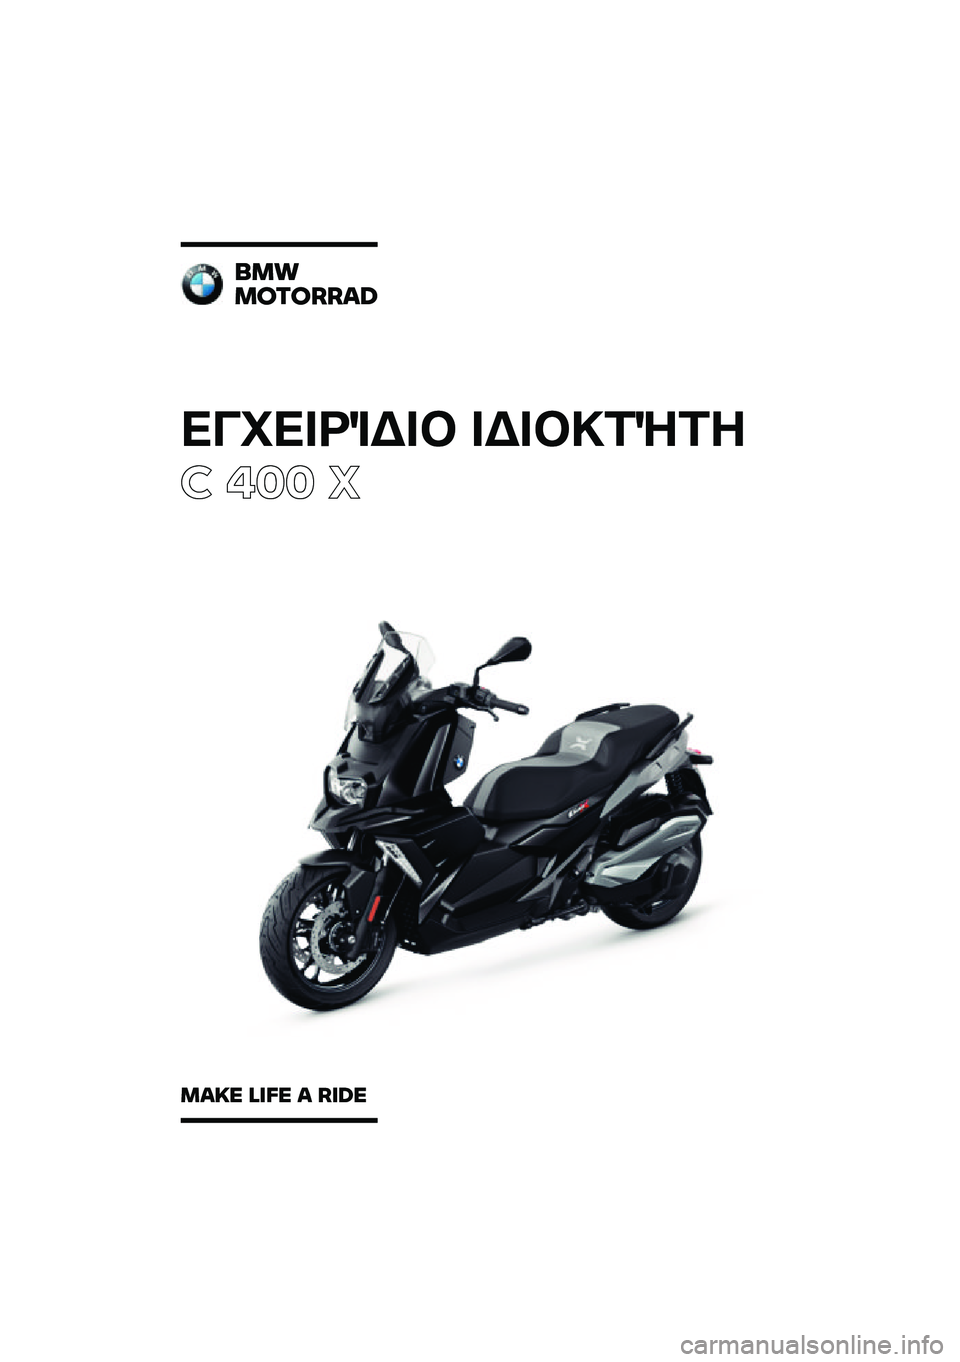 BMW MOTORRAD C 400 X 2020  Εγχειρίδιο ιδιοκτήτη (in Greek) ��������\b��	 ��\b��	�
��\f��
� ��� �
���
�������\b�	
��\b�
� �\f�
�� �\b ��
�	� 